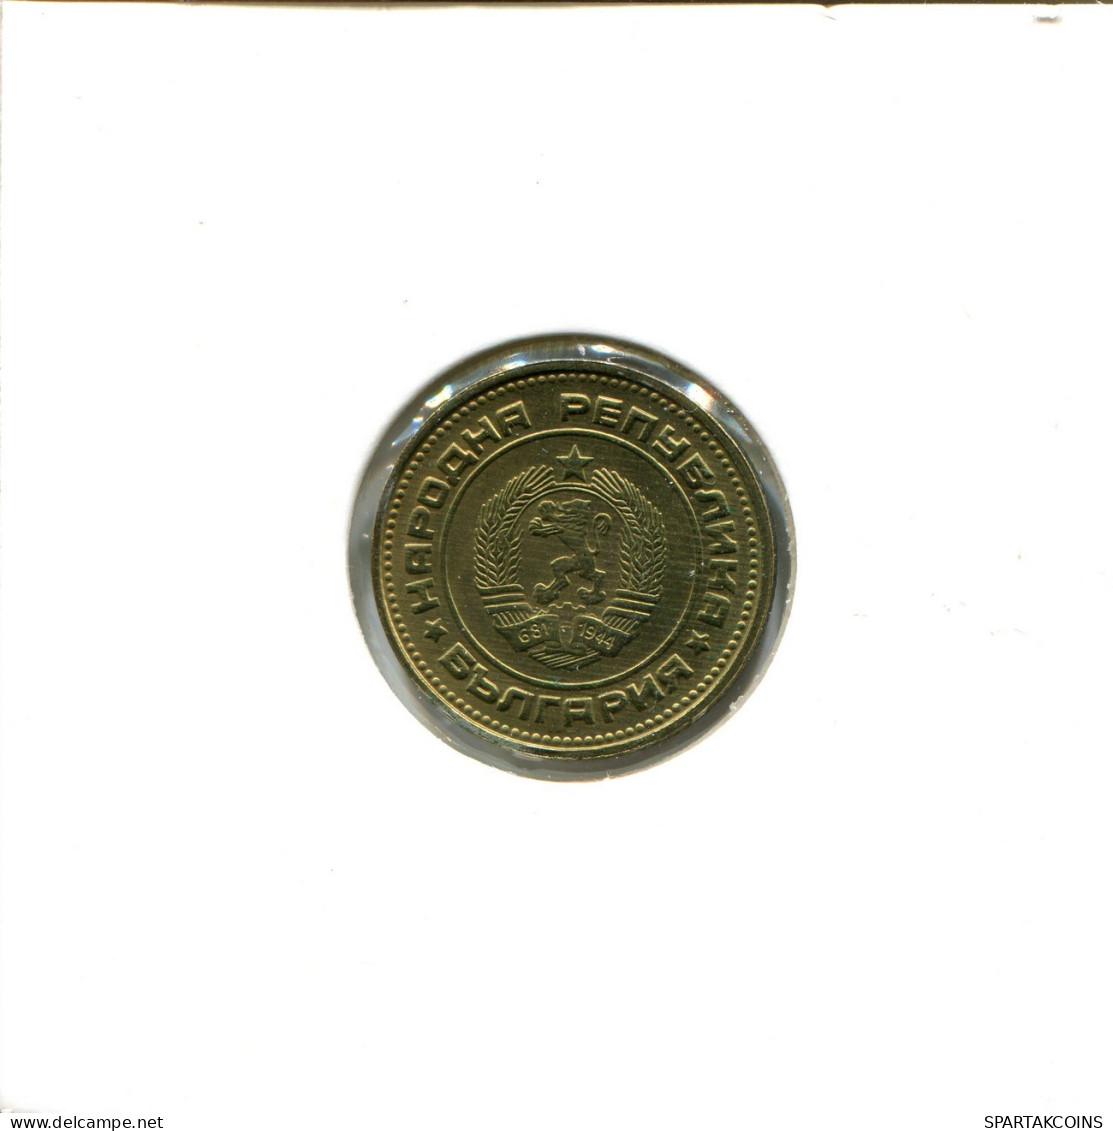 2 STOTINKI 1974 BULGARIA Coin #AX457.U.A - Bulgarien